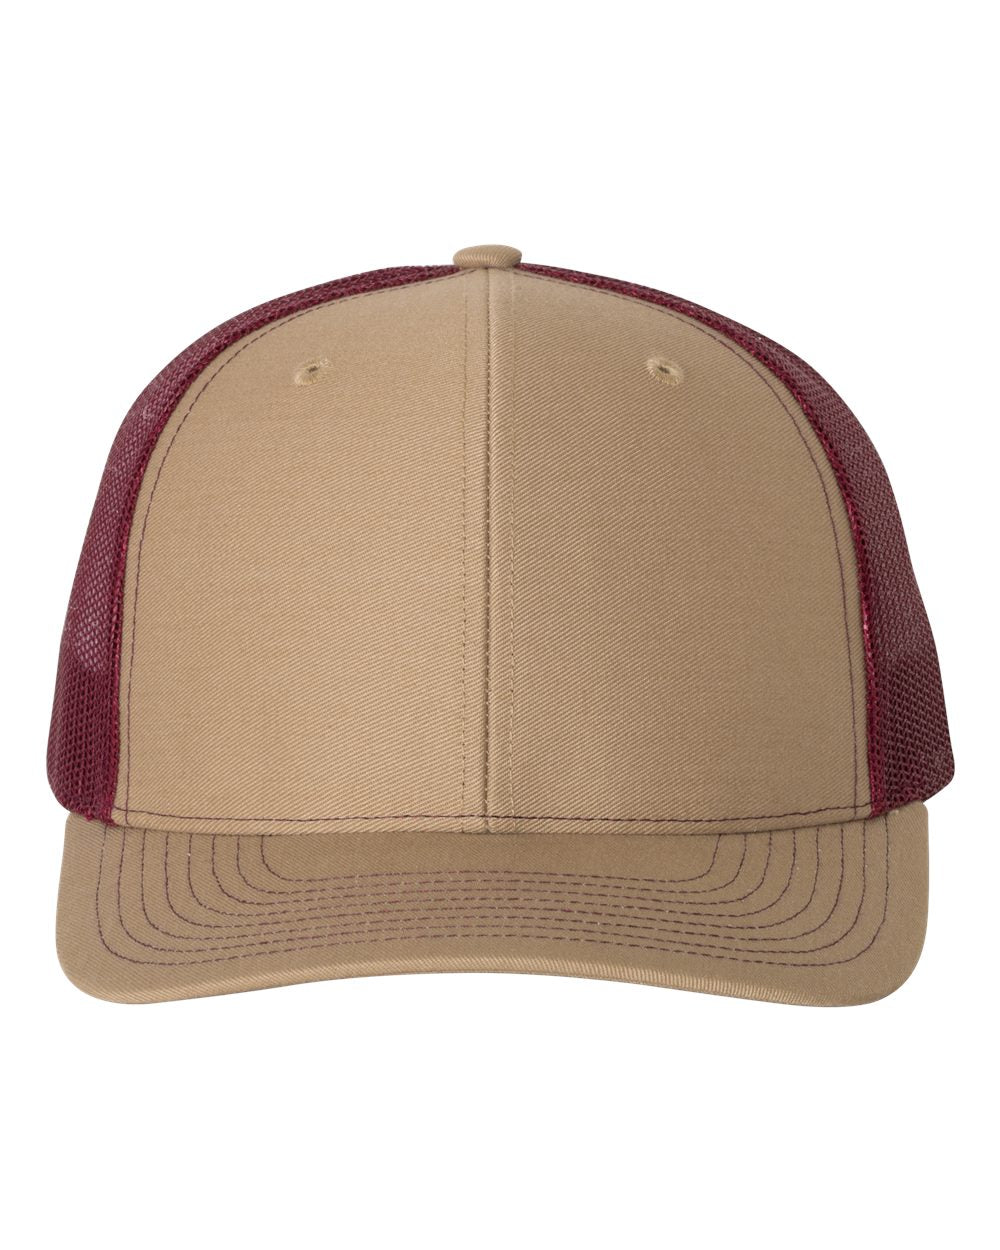 Richardson 112 Blank Low Profile Snapback Mesh Baseball Trucker Hat Cap Khaki & Burgundy